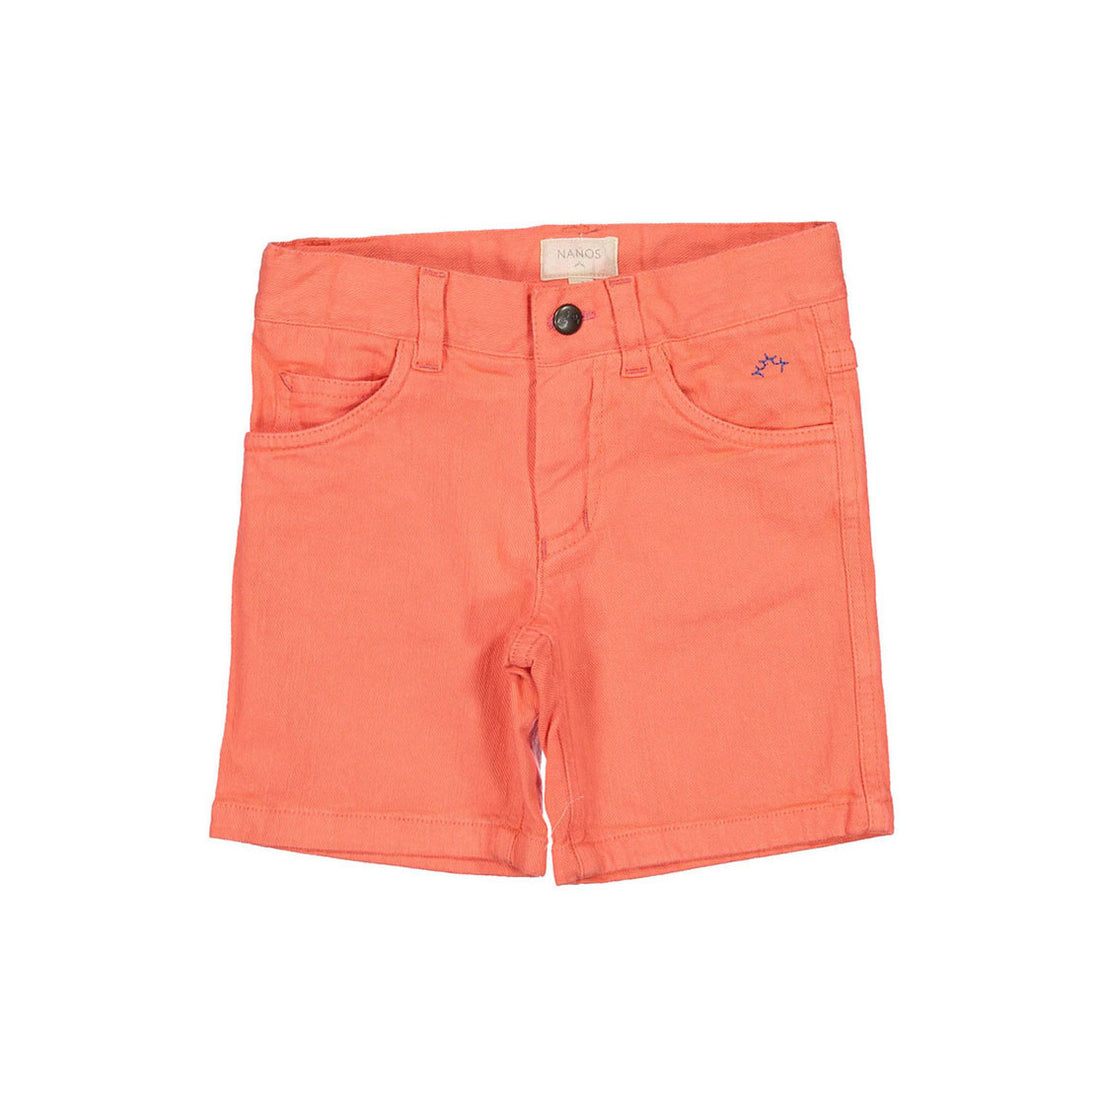 Nanos Orange Shorts